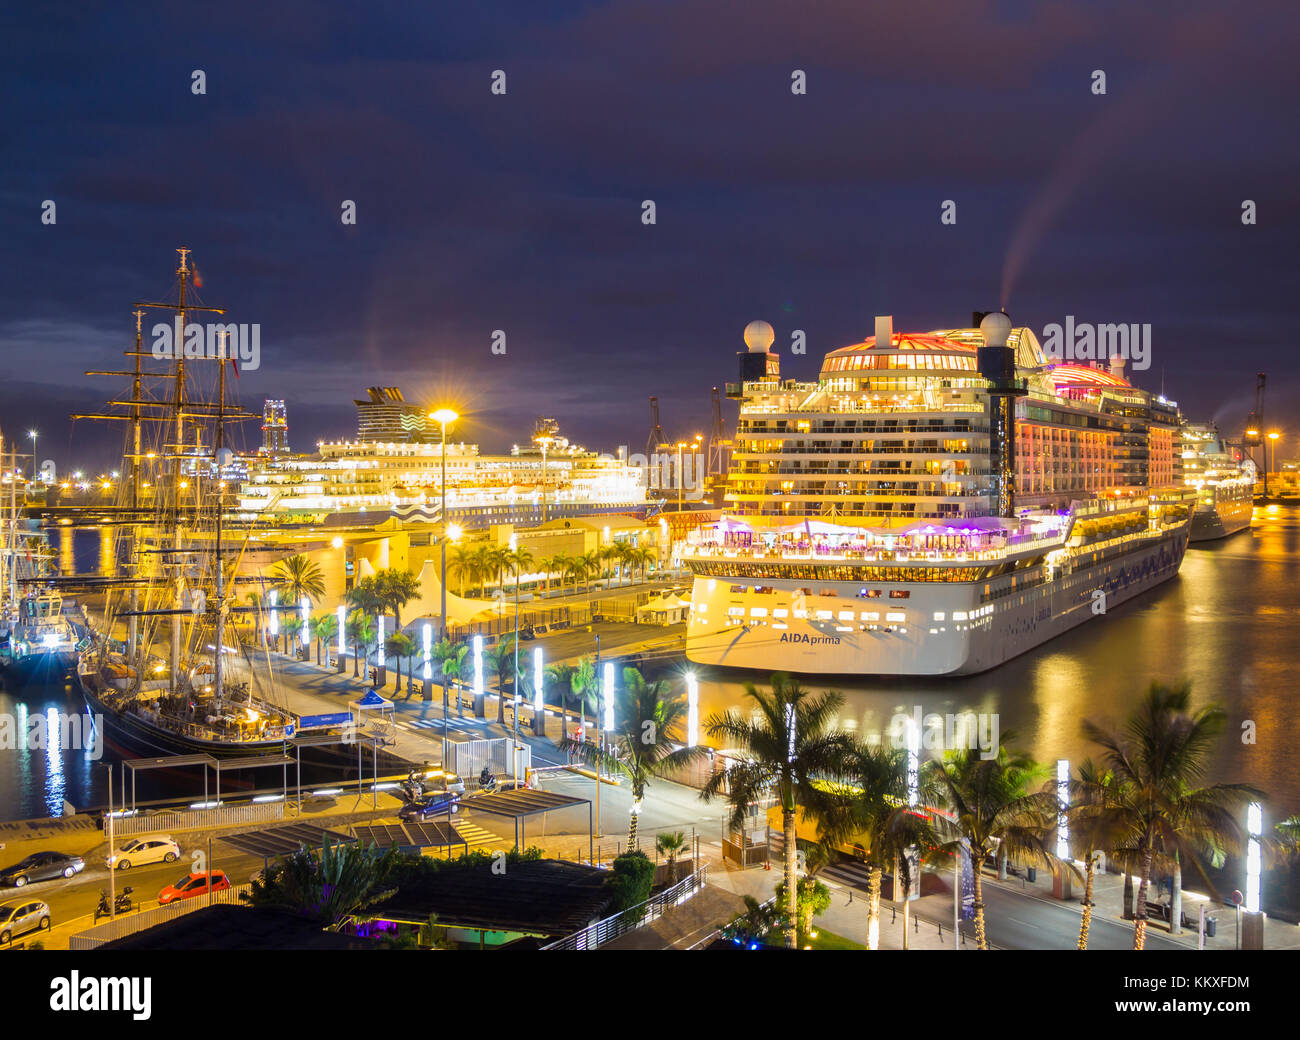 Aida Prima cruise ship in Las Palmas, Gran Canaria, Canary Islands, Spain Stock Photo